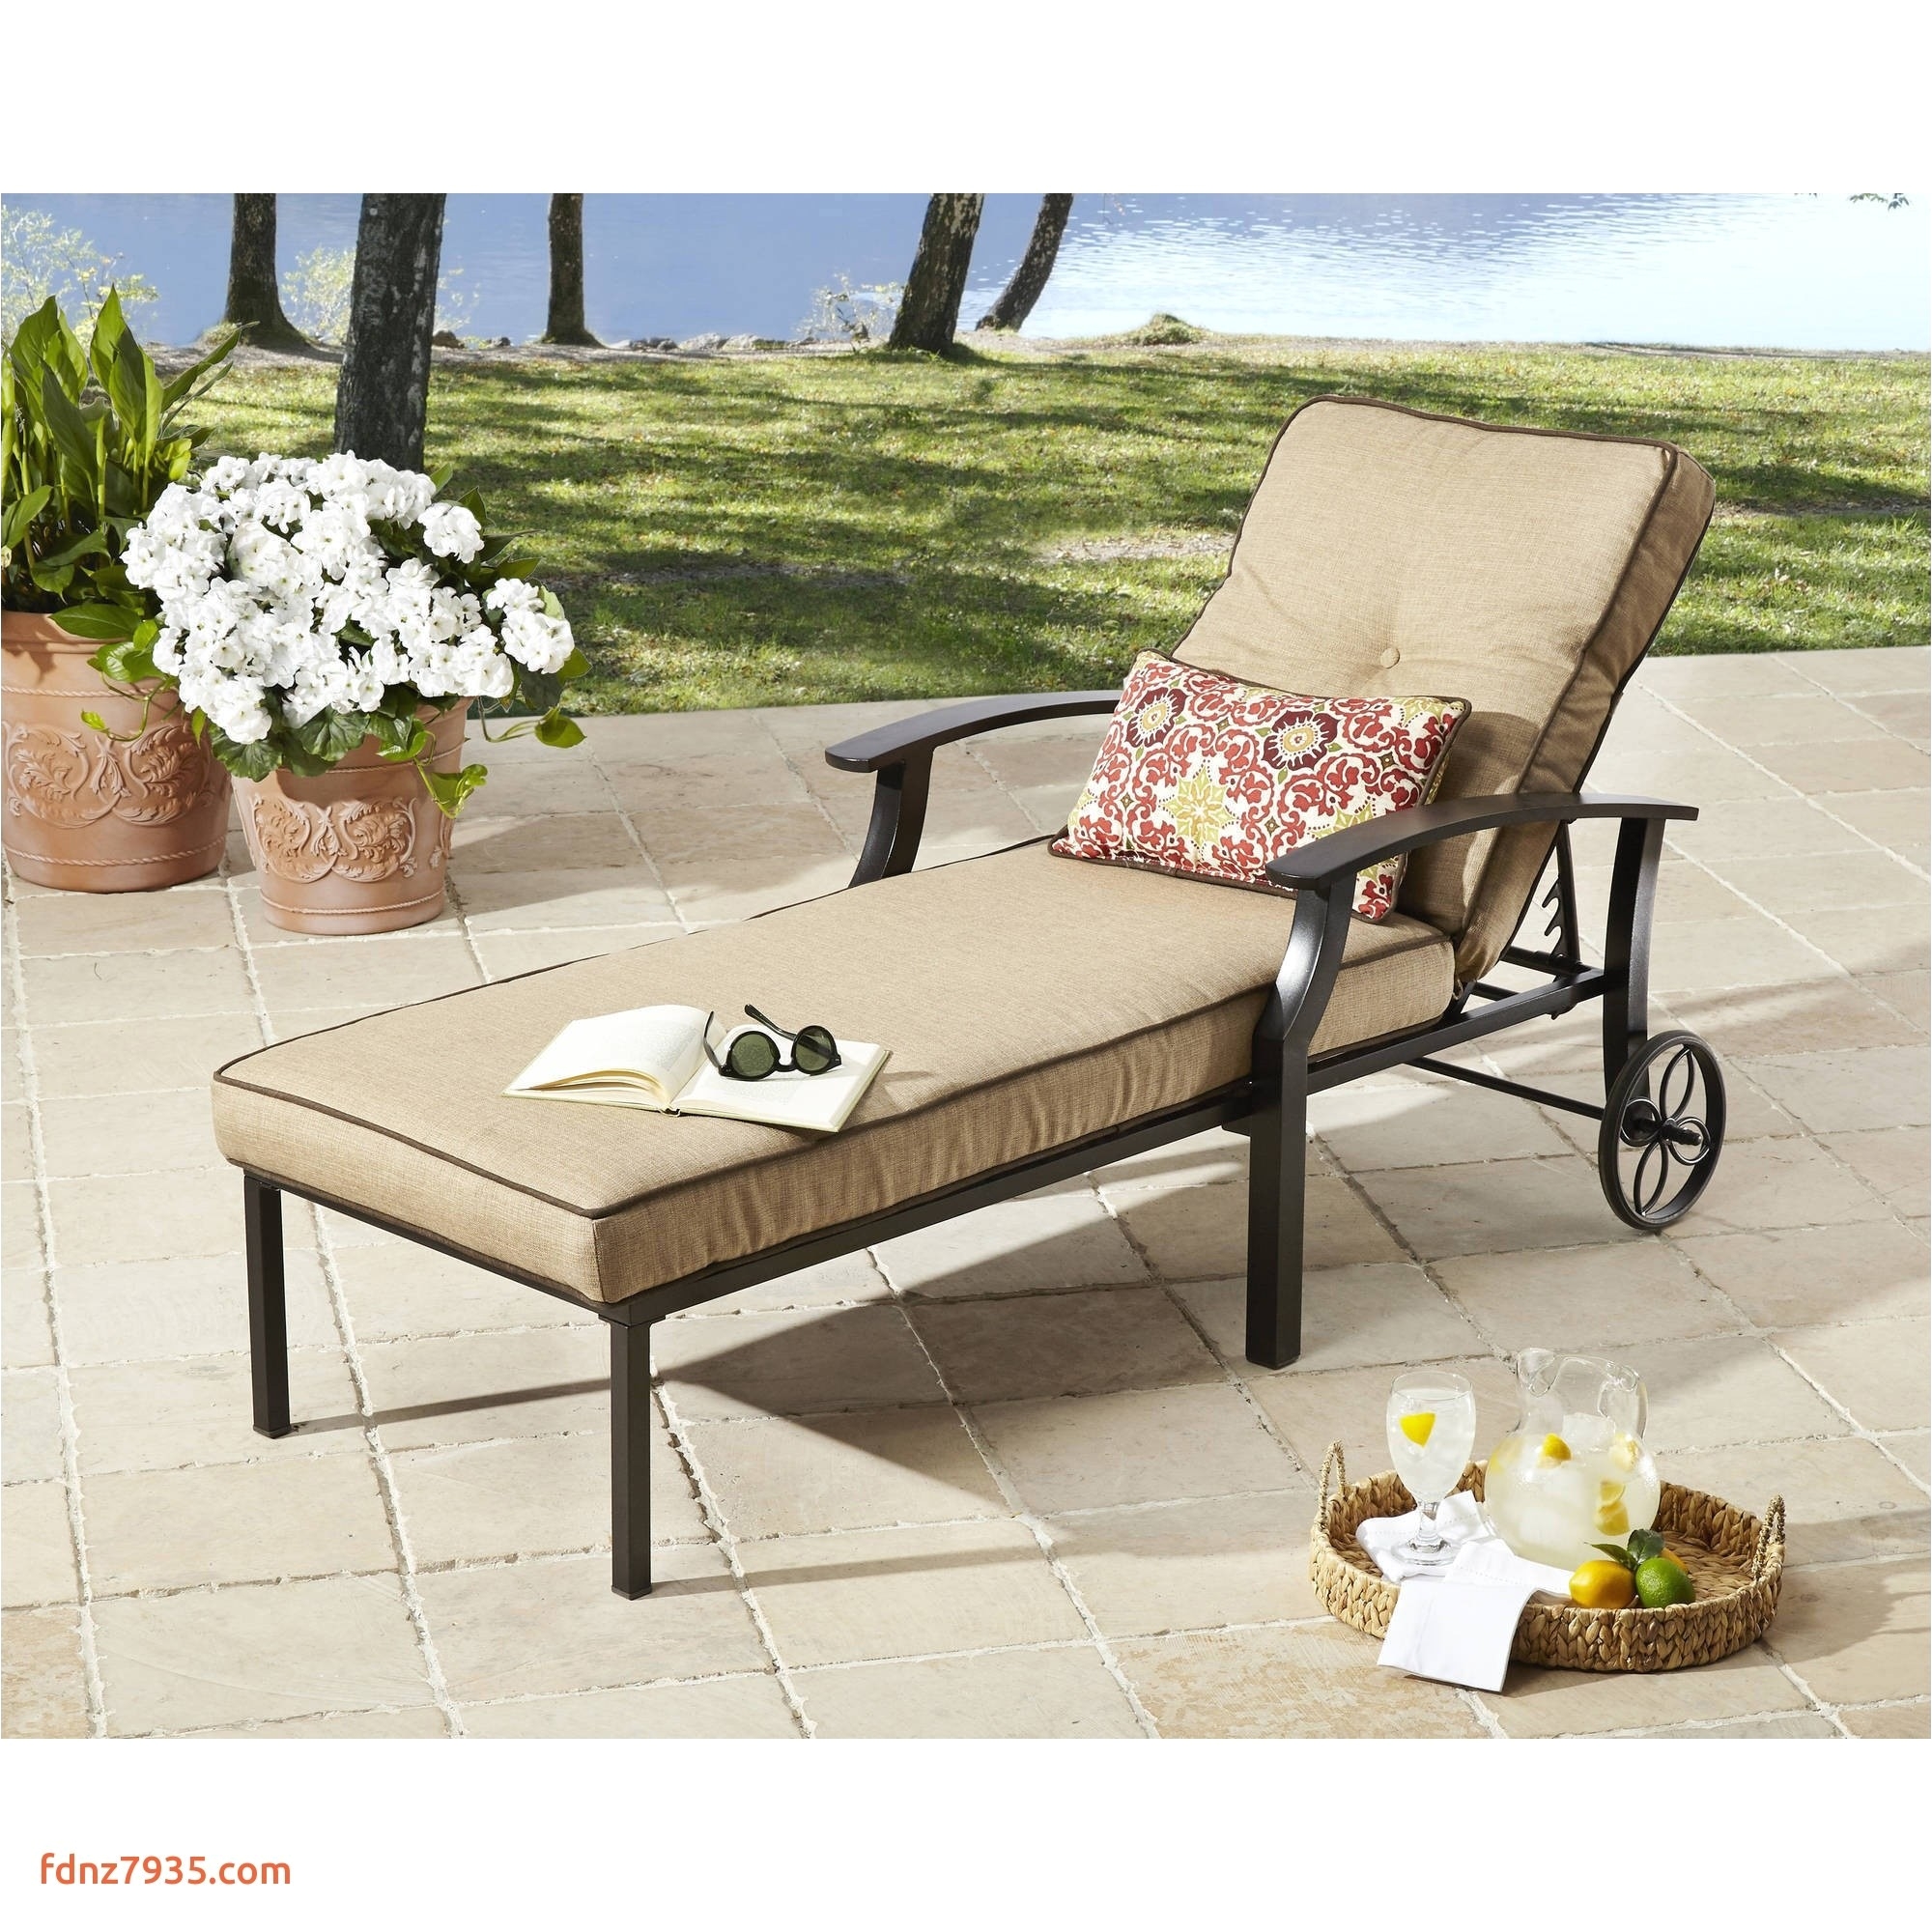 wilson and fisher patio furniture manufacturer inspirational eucalyptus patio furniture fresh sofa design usatrip org